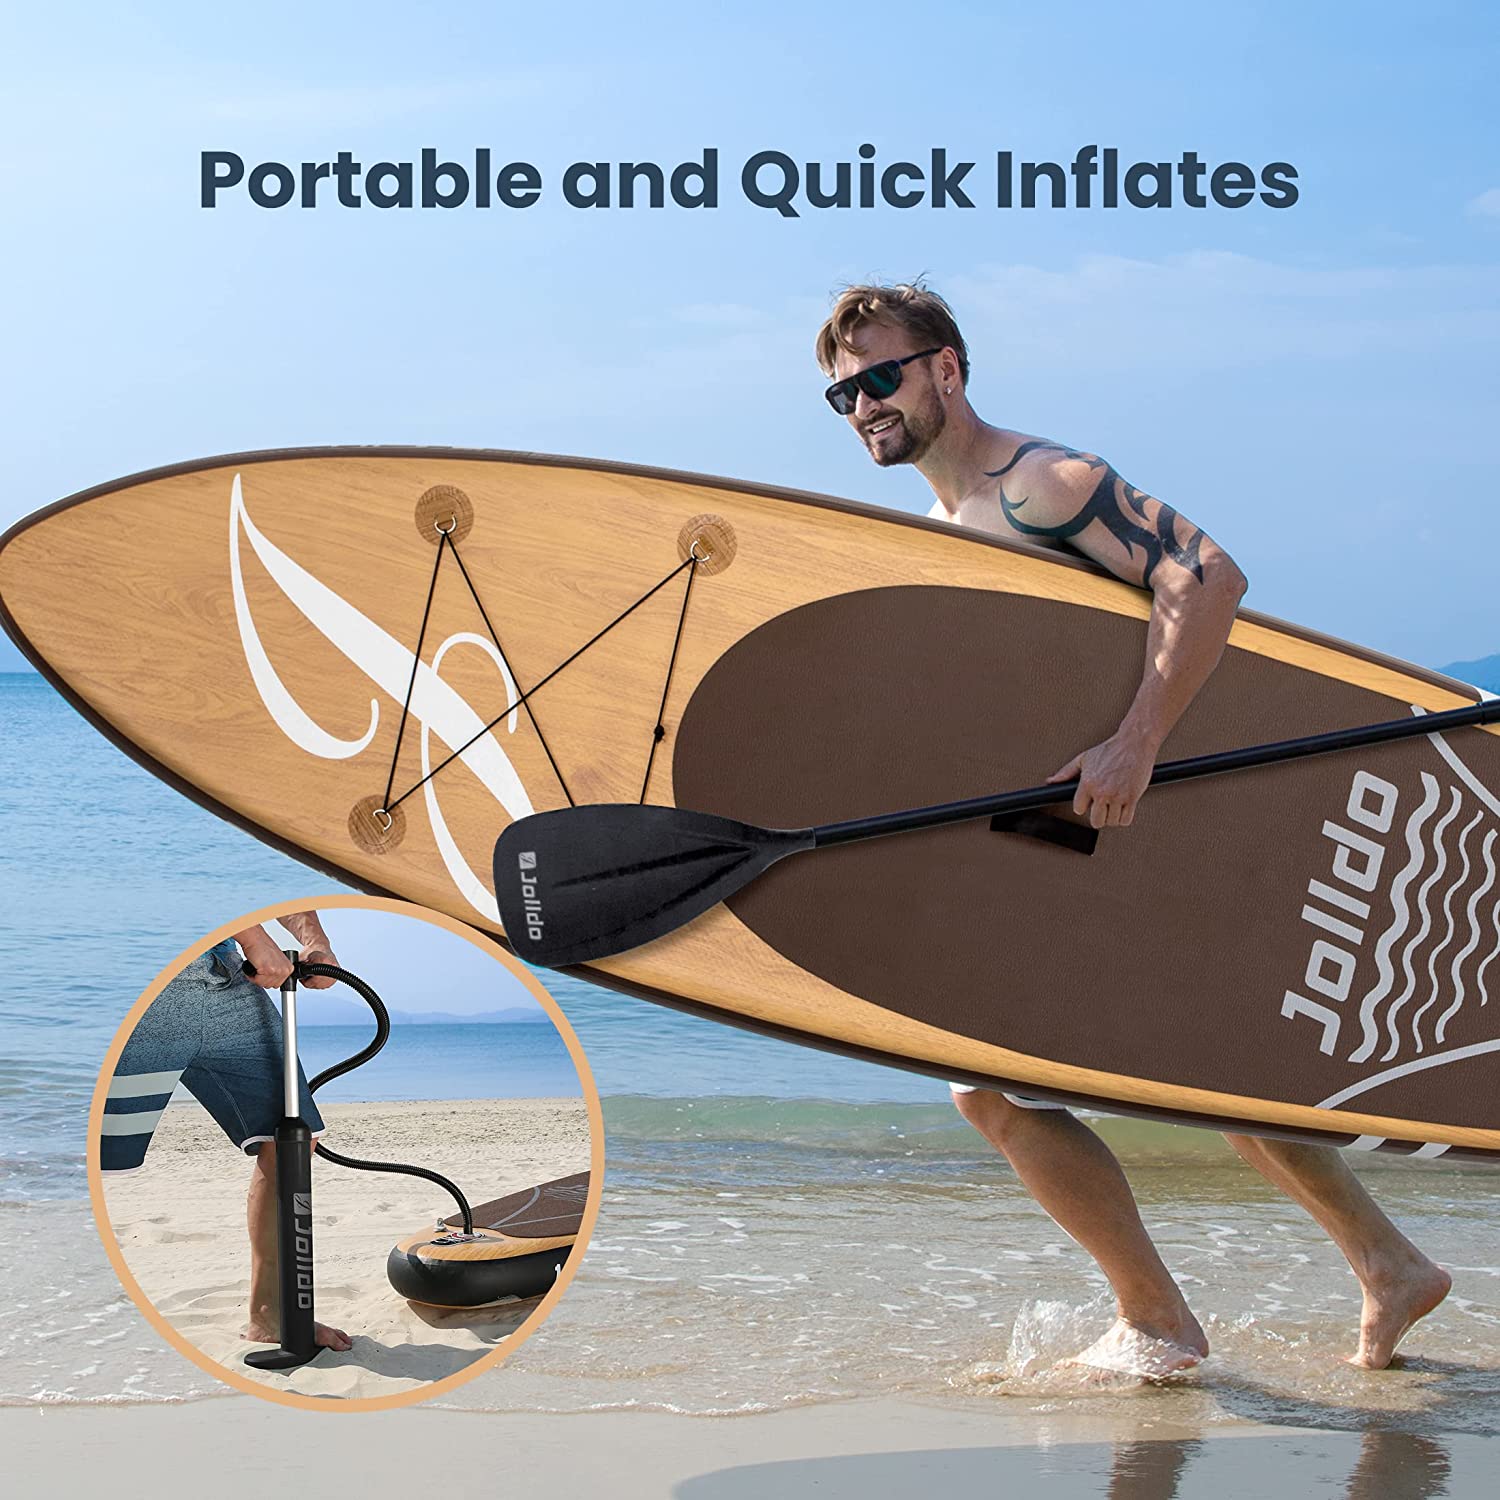 Jolldo 10'6"  Inflatable Paddle Board SUP